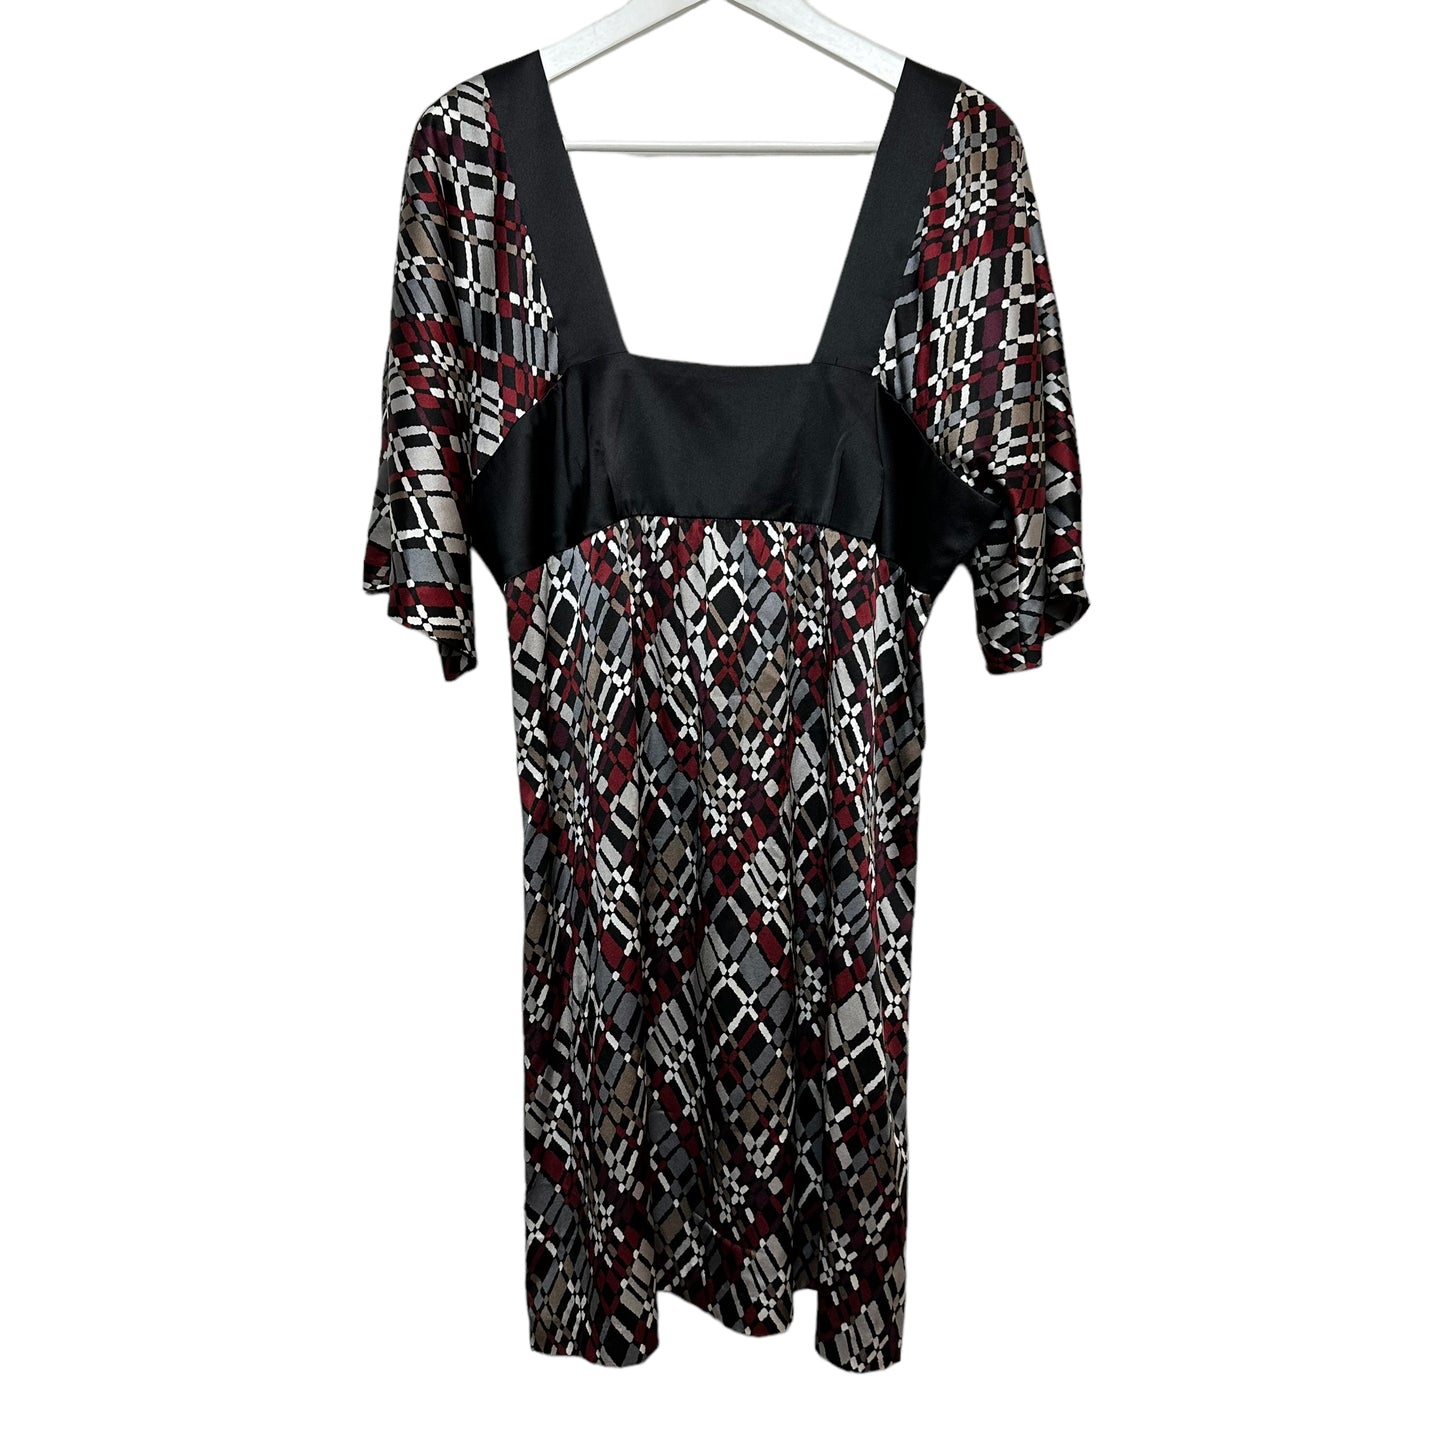 Y2K Trina Turk Silk Dress Geometric Patterned Red Black Grey Kimono Babydoll 12